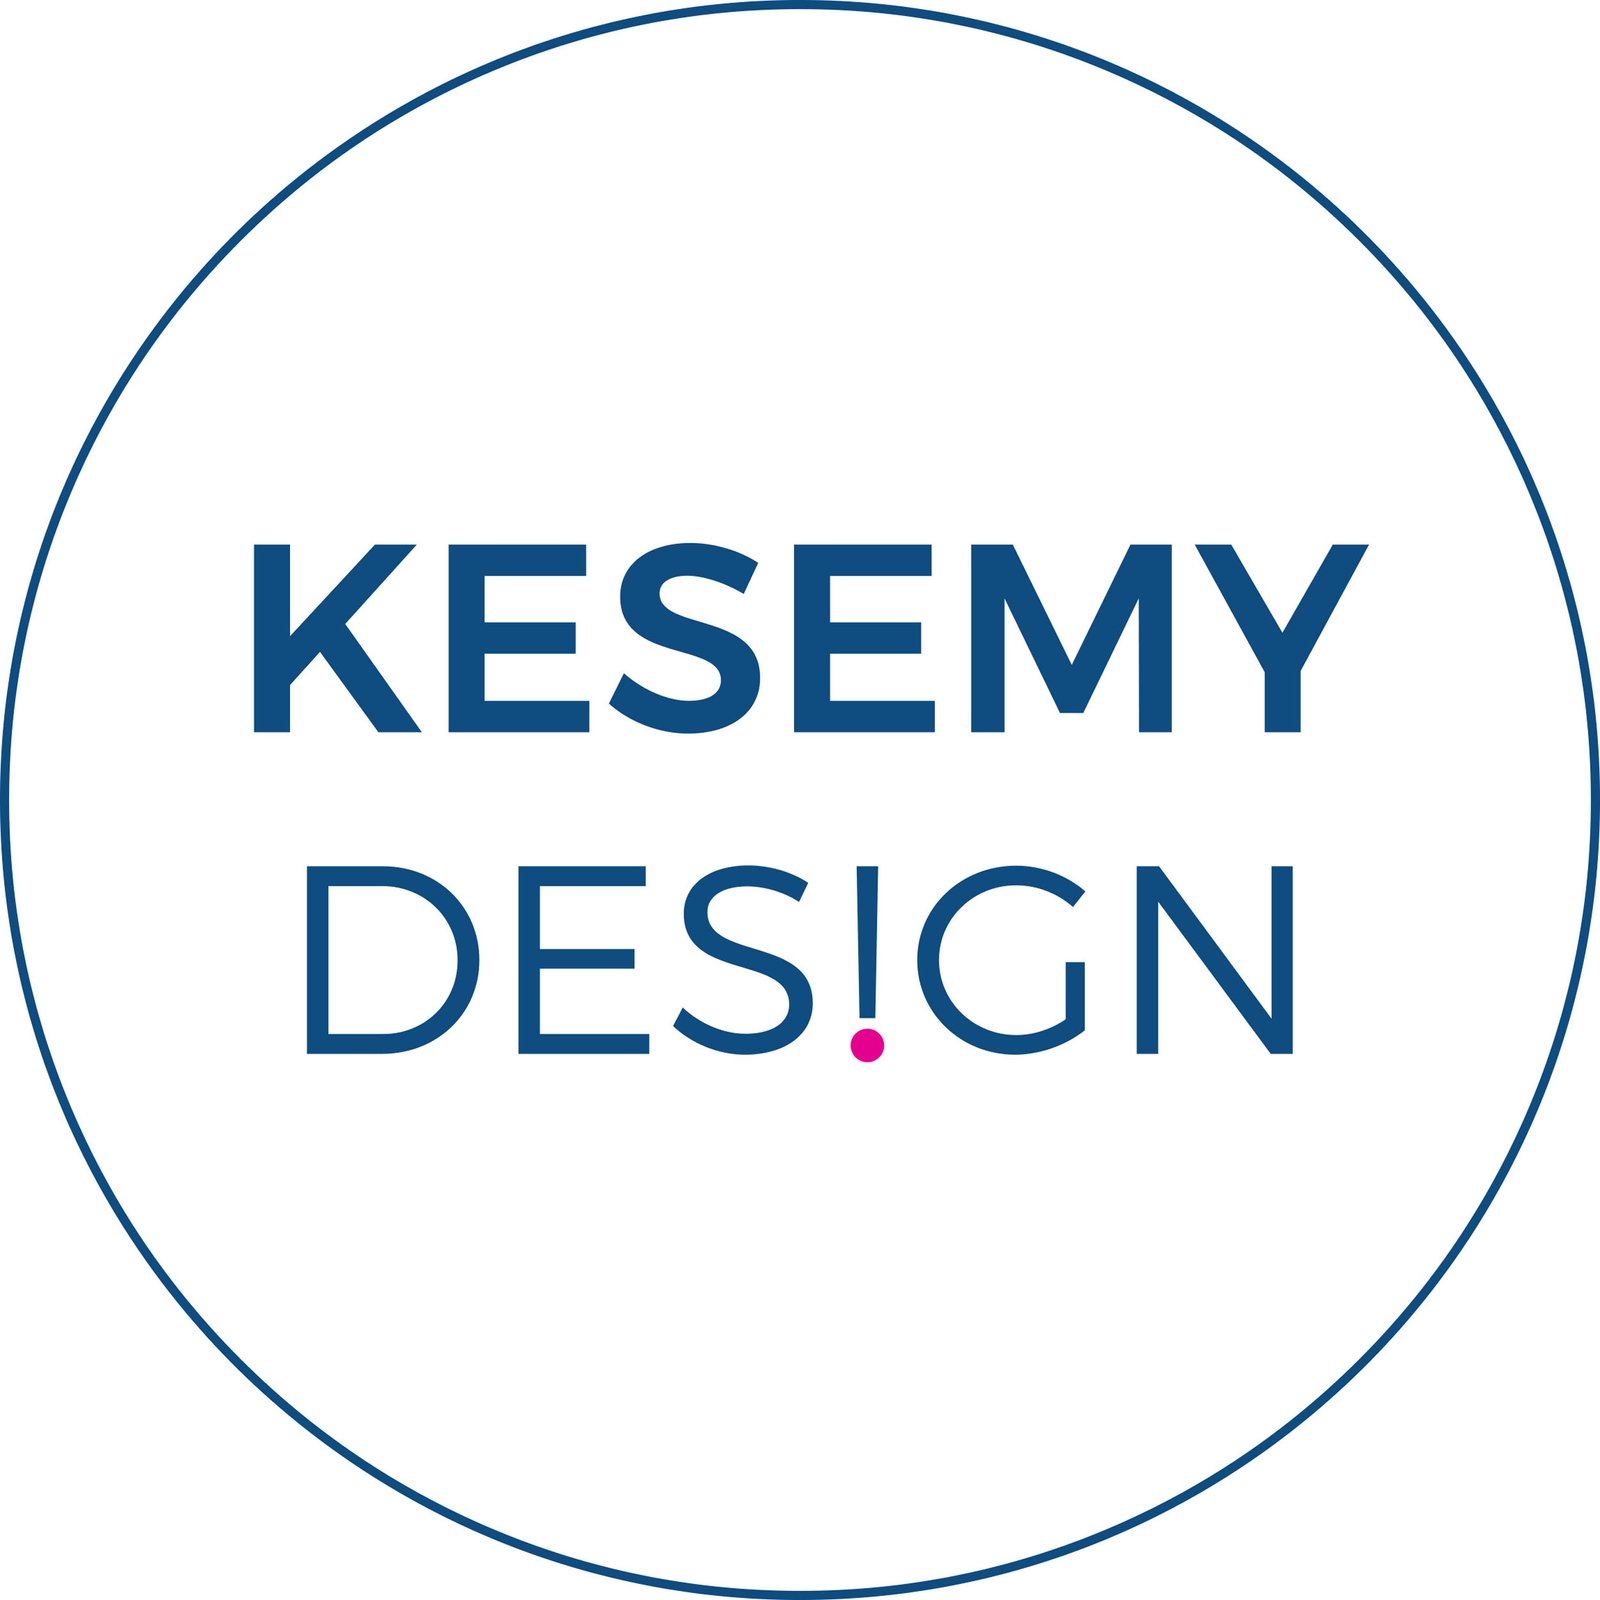 Kesemy Design